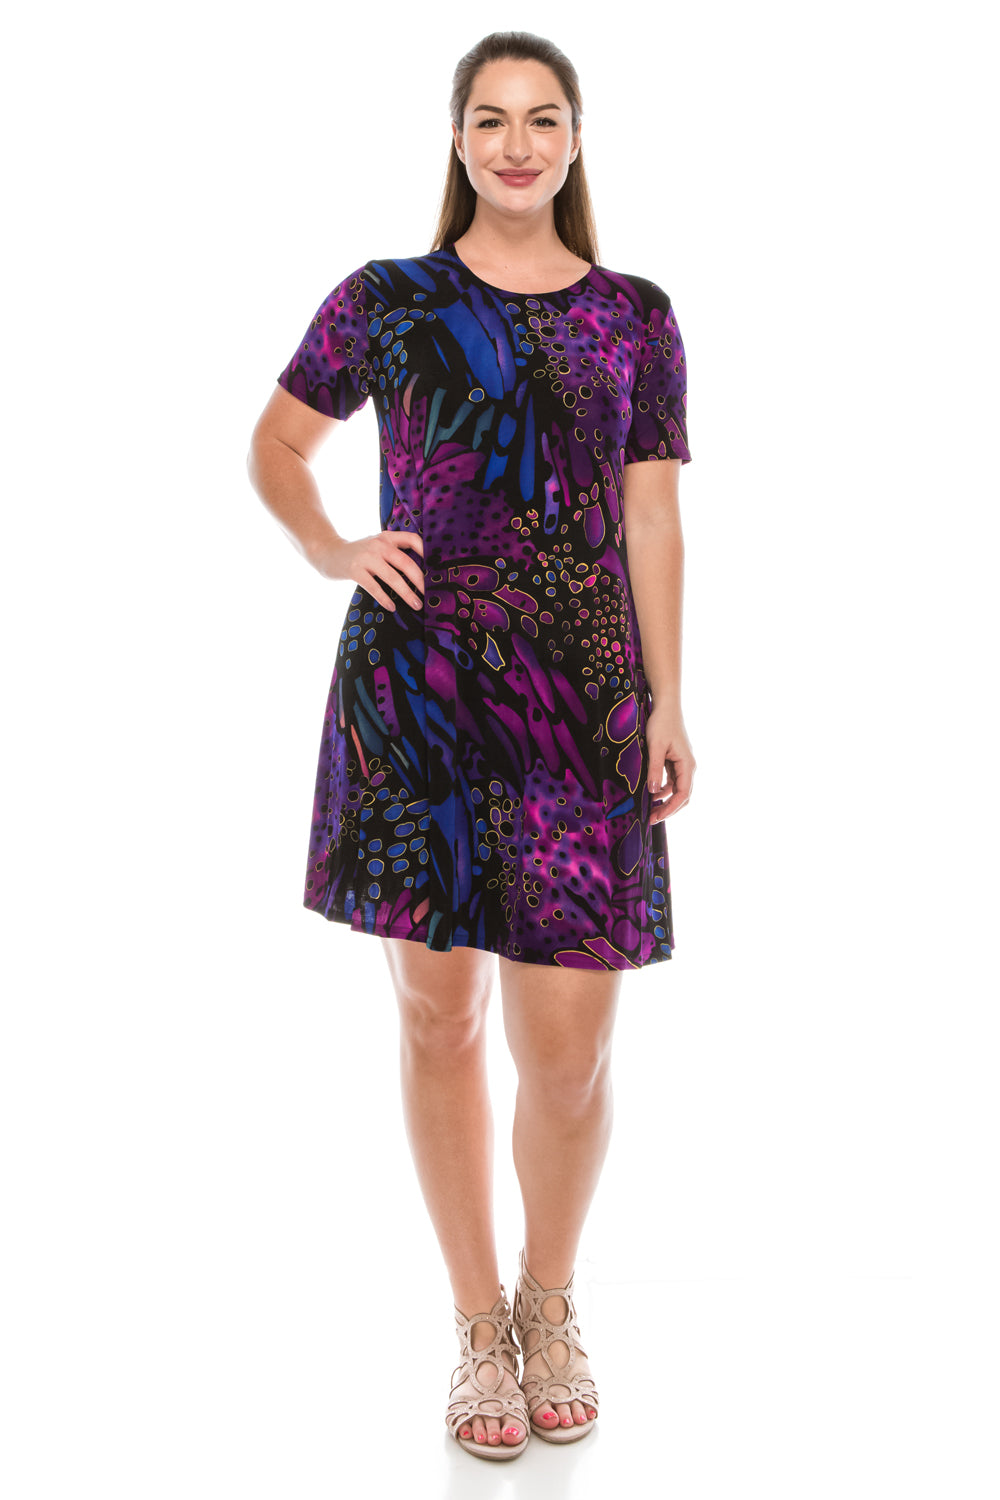 Jostar Women's Stretchy Missy Dress Short Sleeve Print, 704BN-SP-W207 - Jostar Online